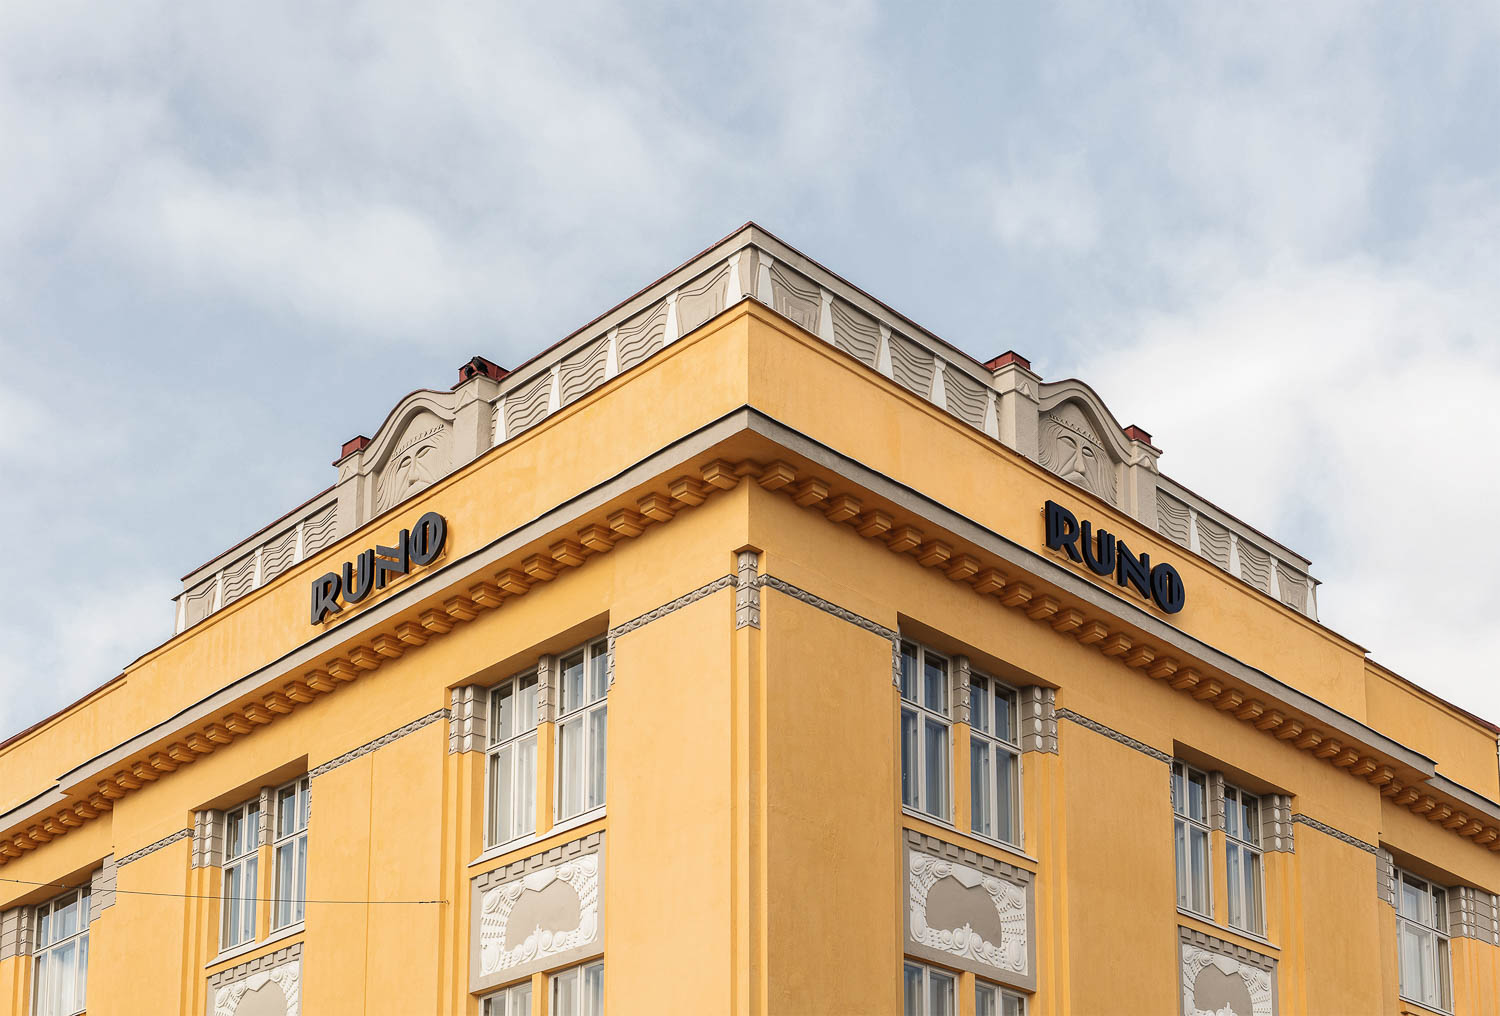 The Art Deco façade at Runo Hotel in Porvoo, Finland